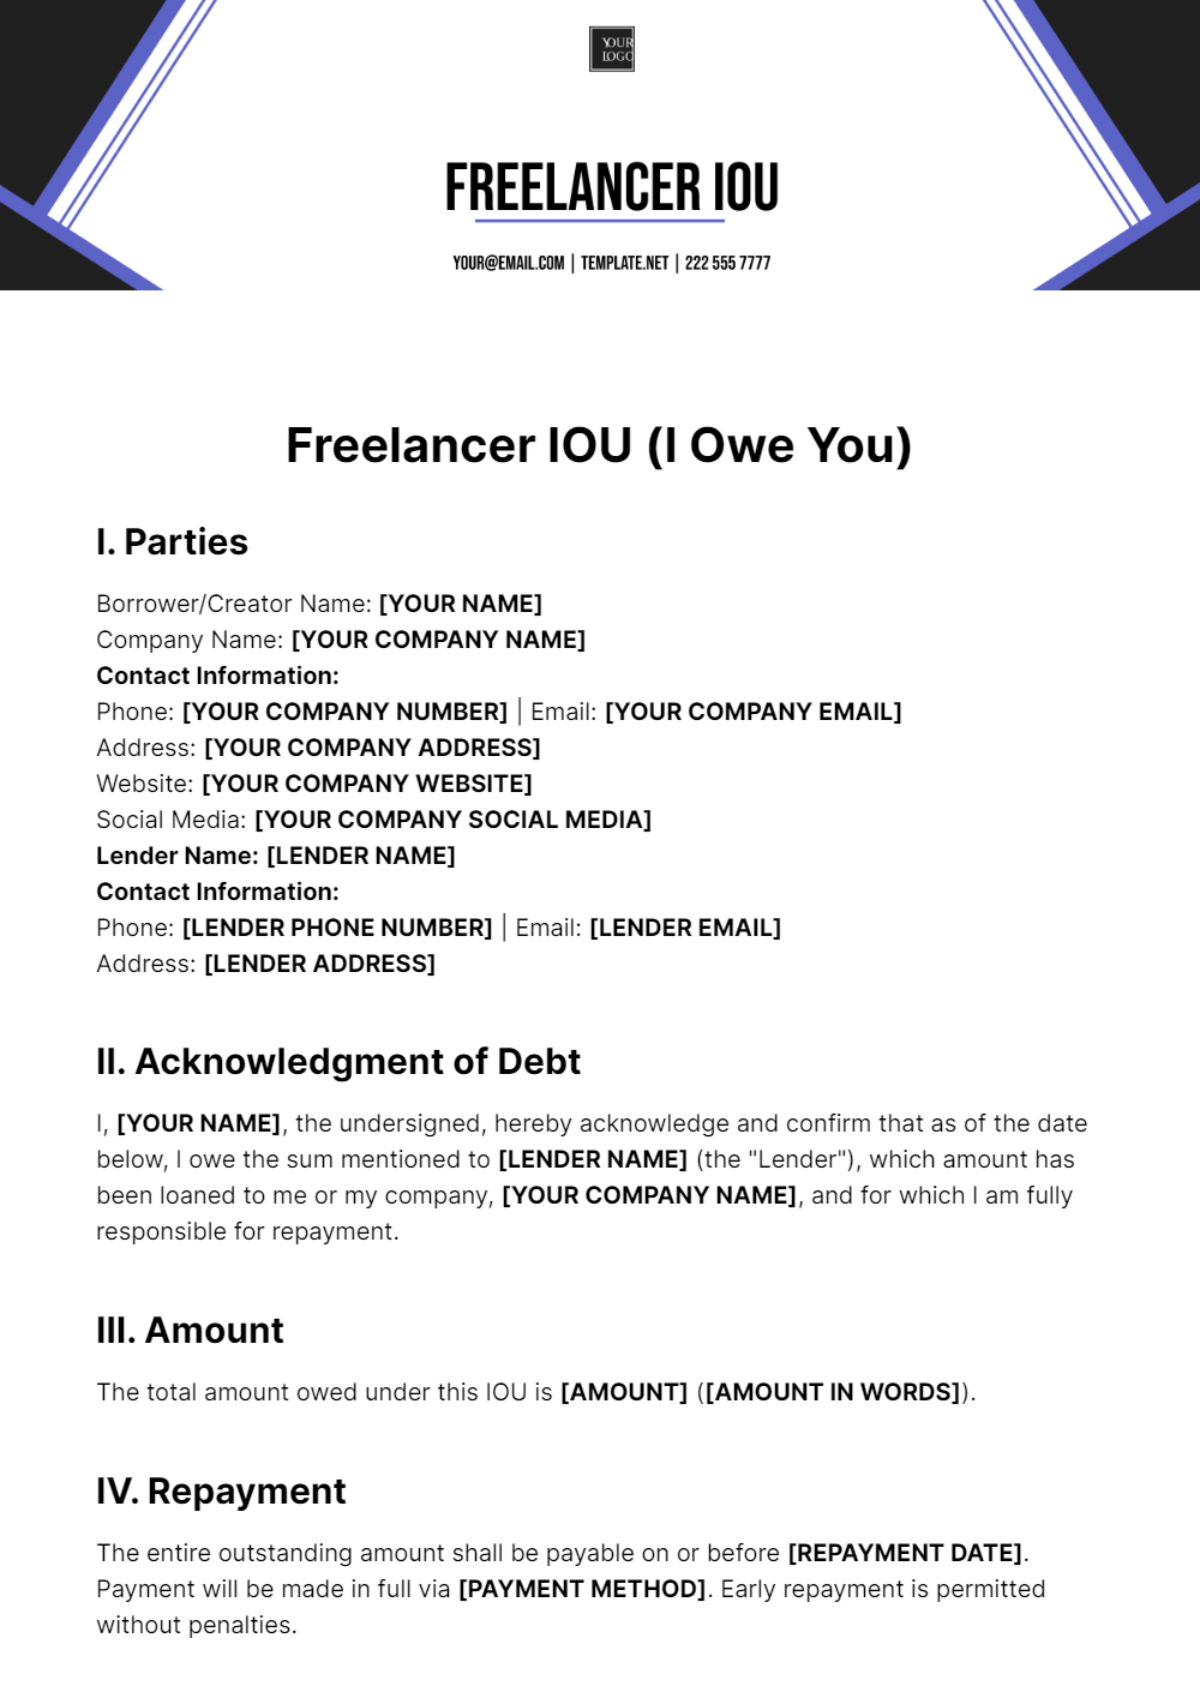 Freelancer IOU Template